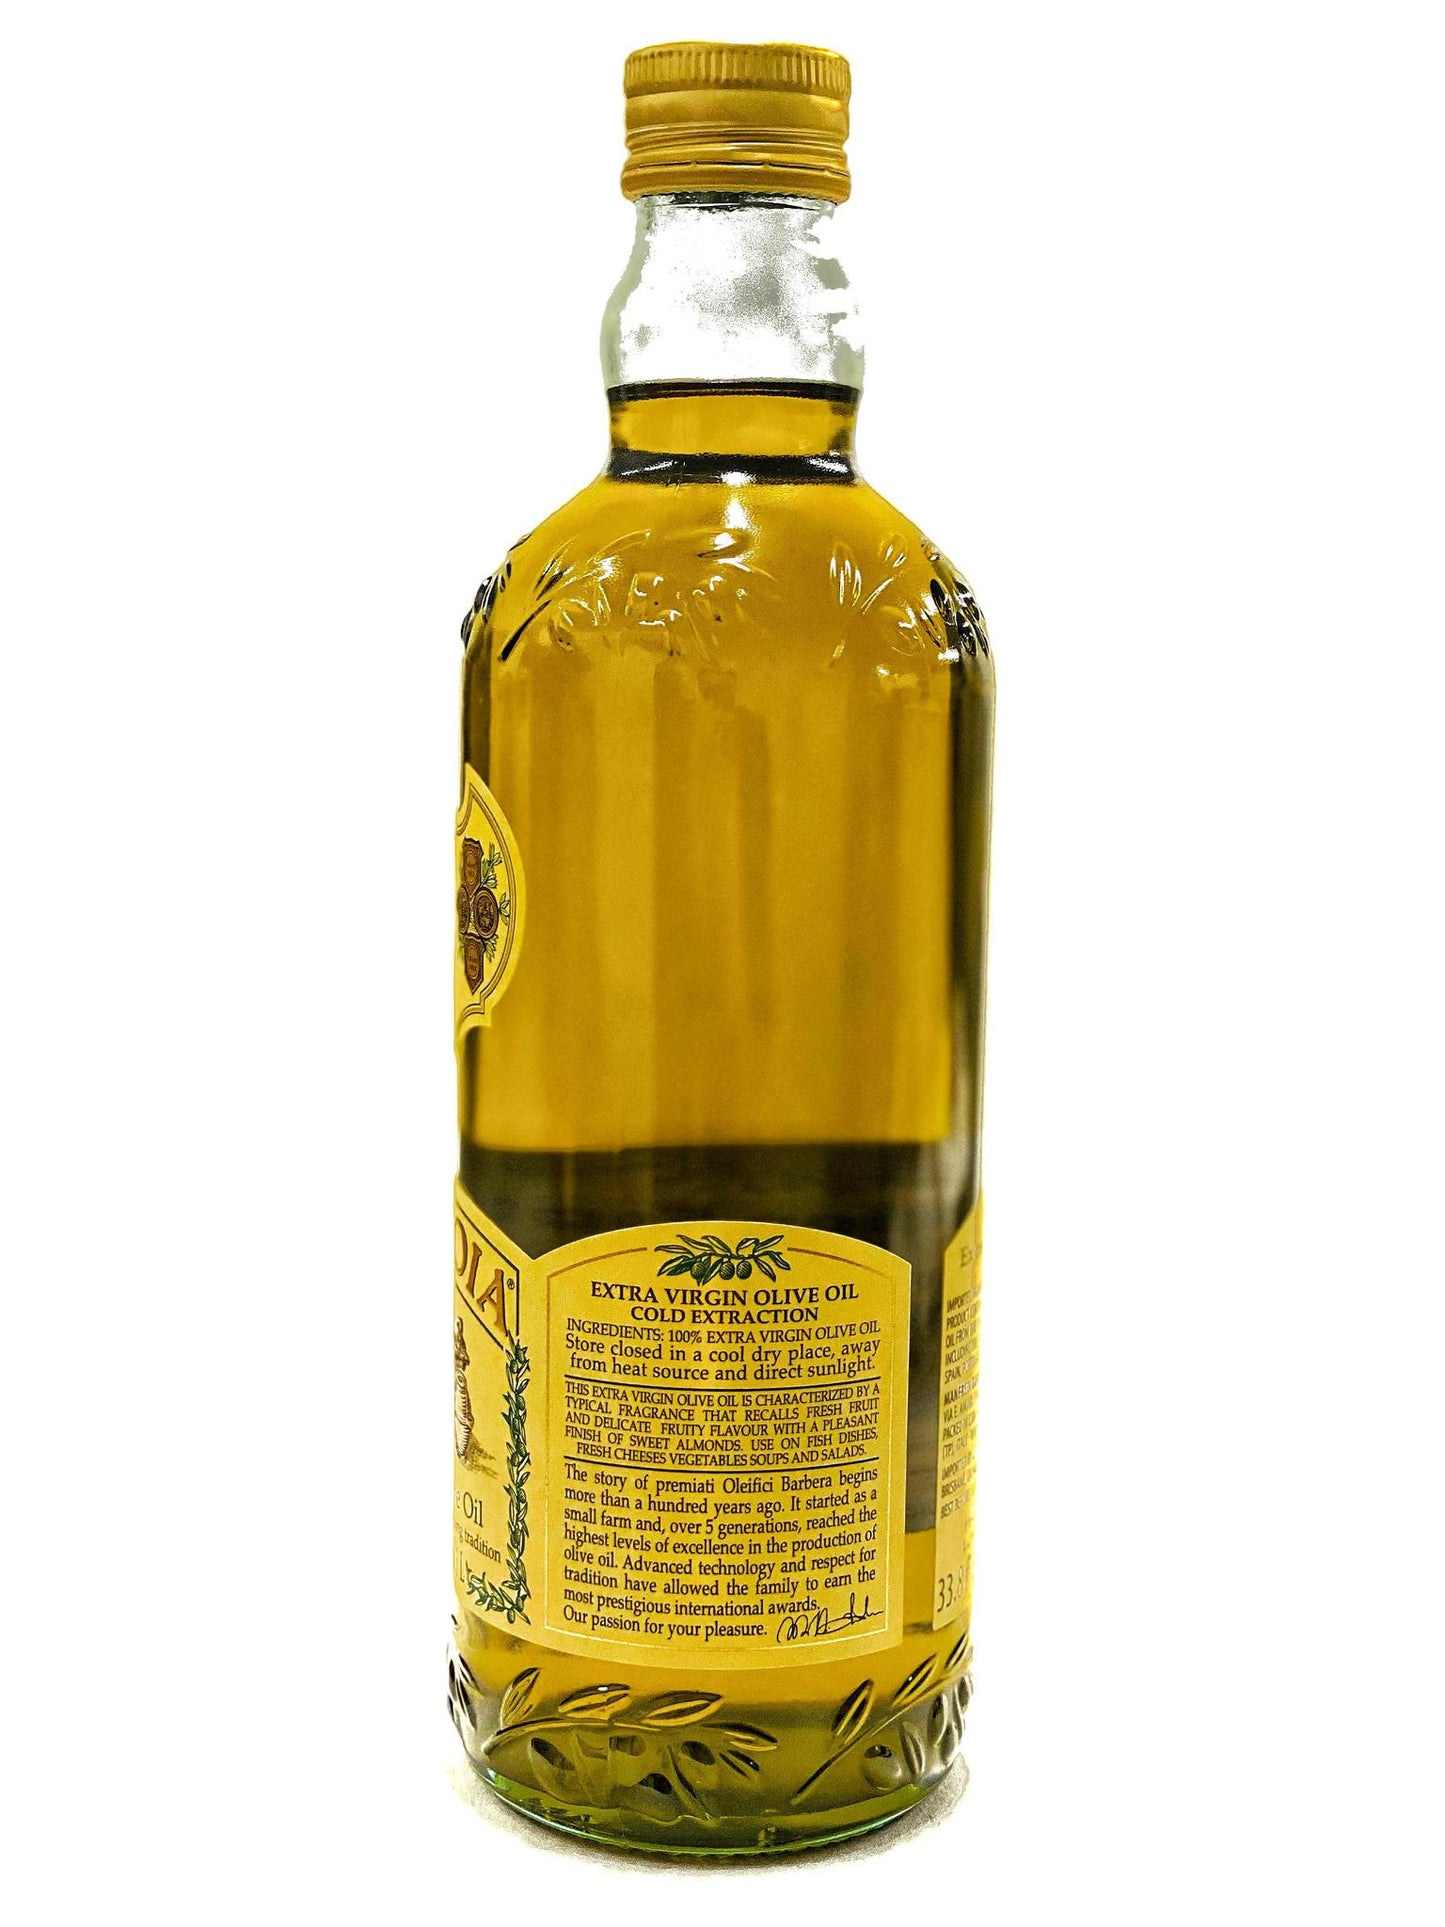 Oleifici Frantoia Extra Virgin Olive Oil, 33.8 fl oz